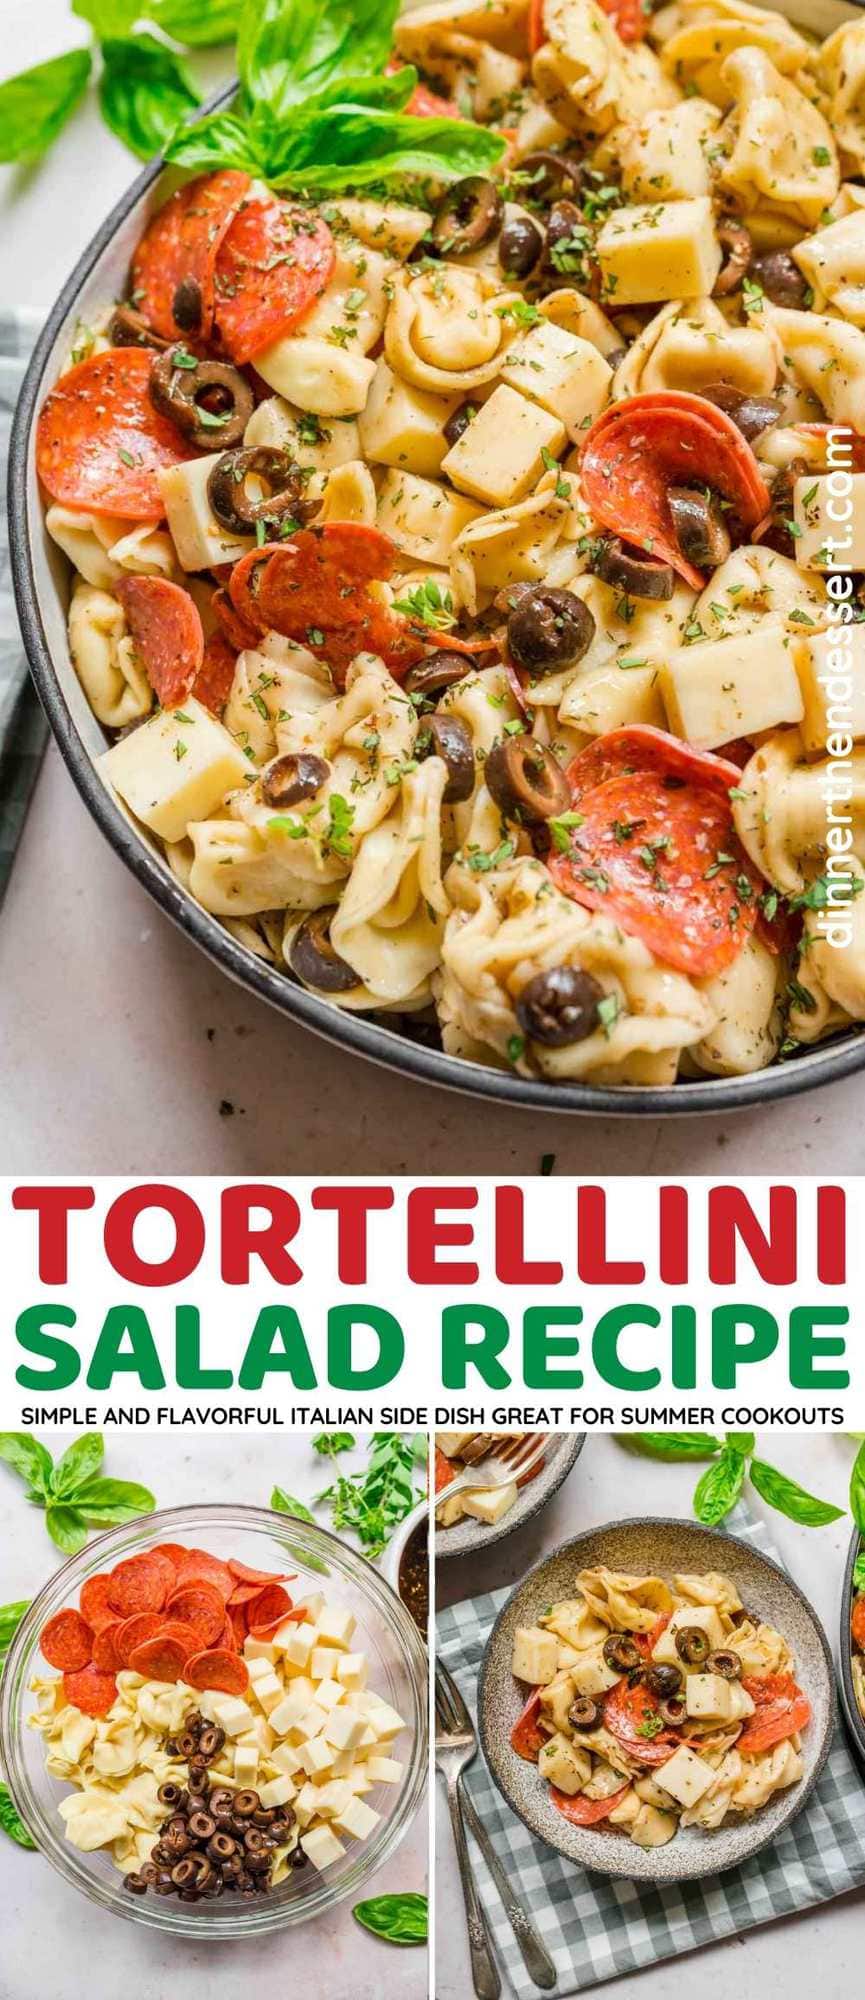 Tortellini Salad collage